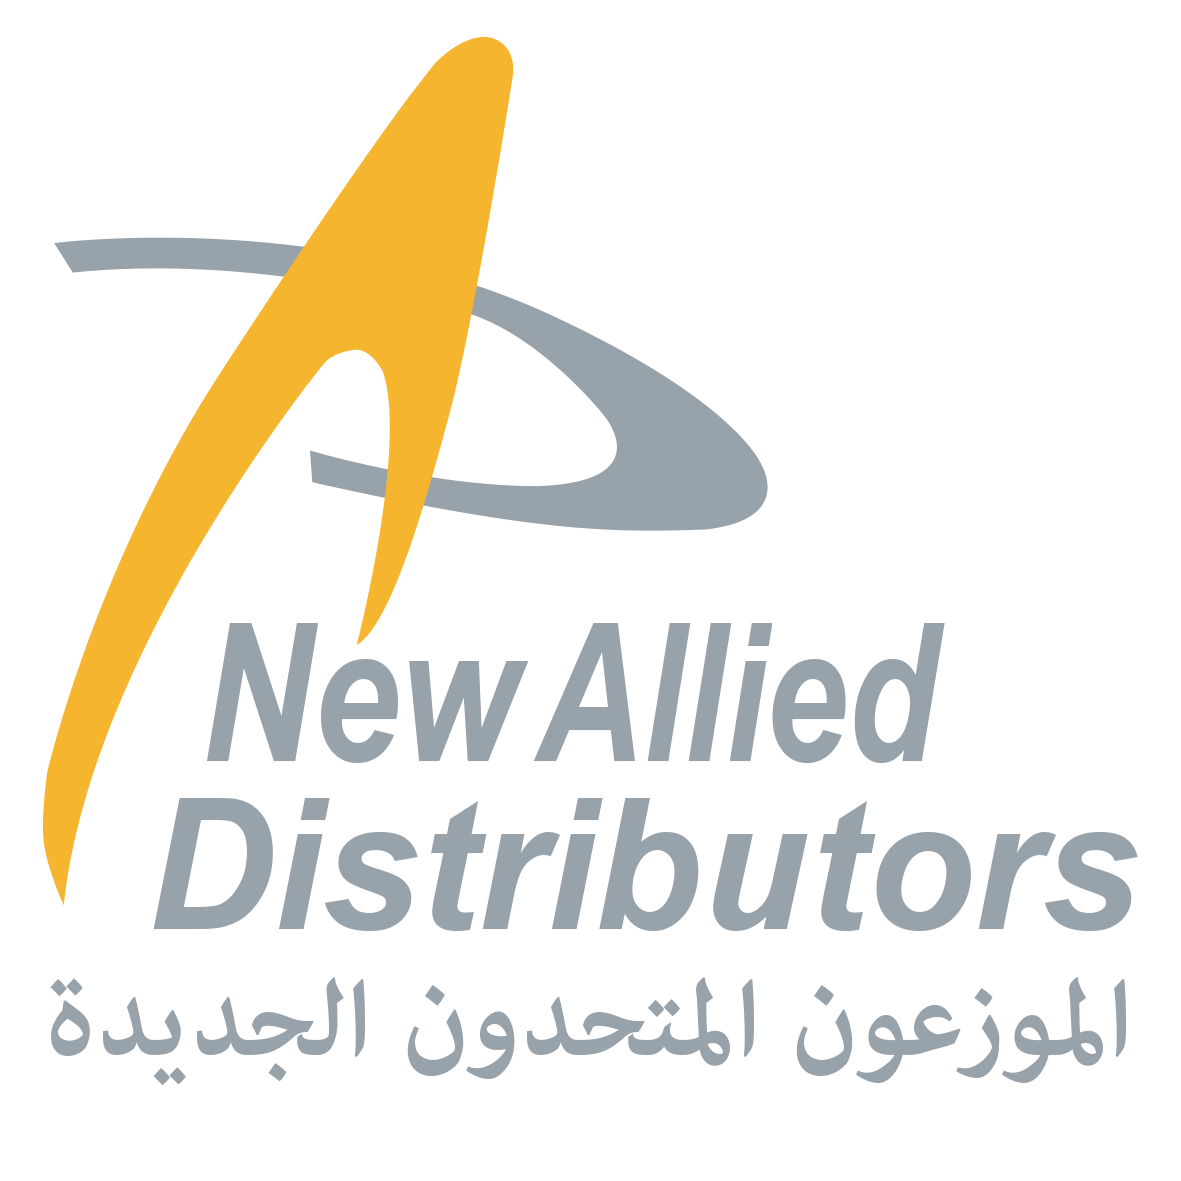 New Allied Distributors